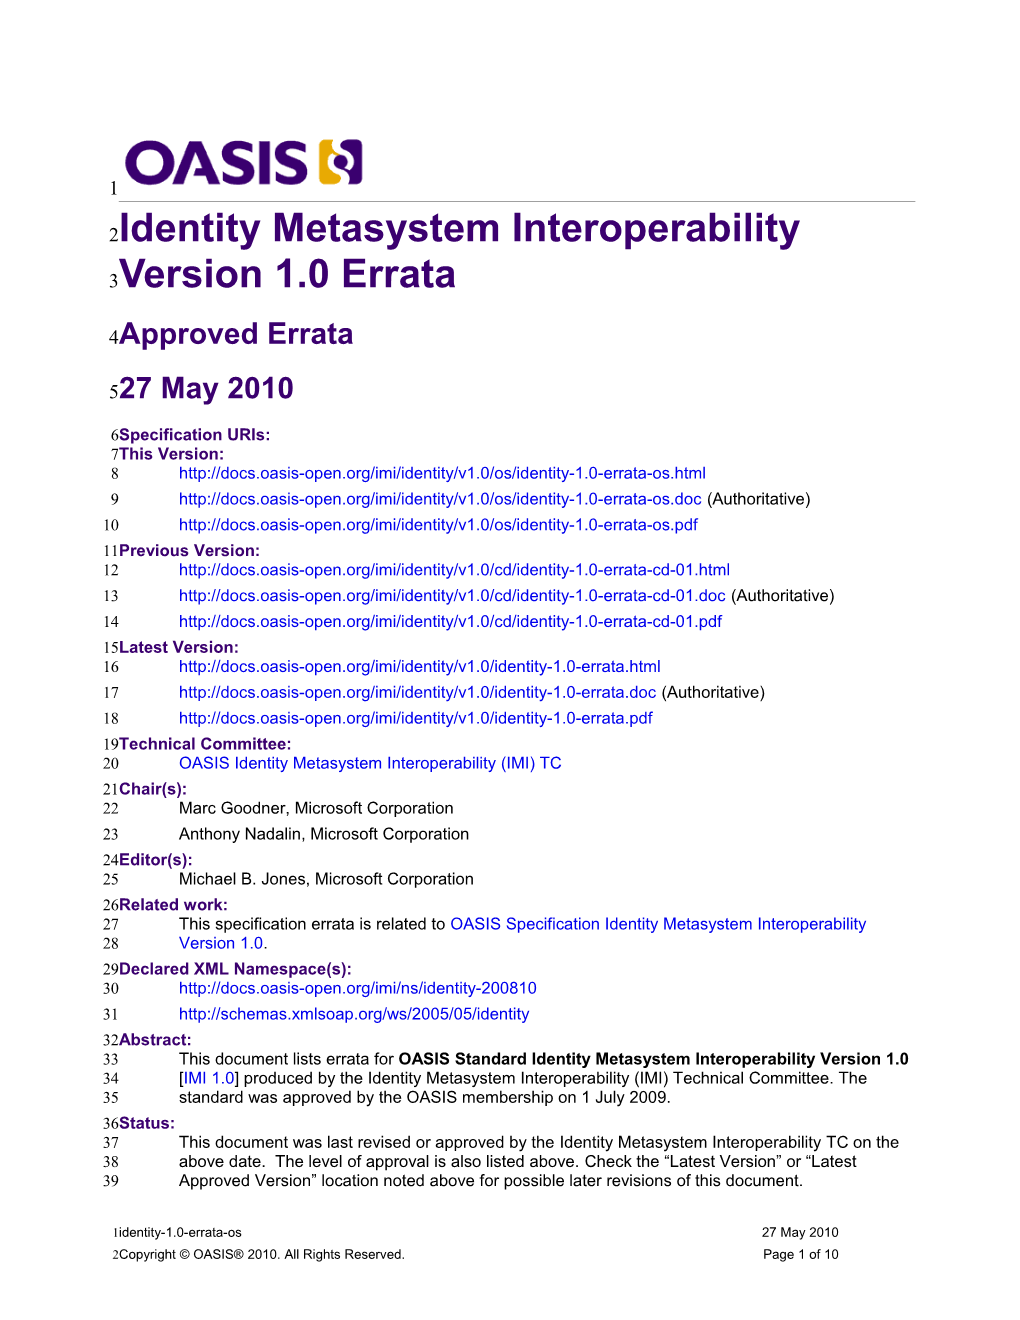 Identity Metasystem Interoperability Version 1.0 Errata